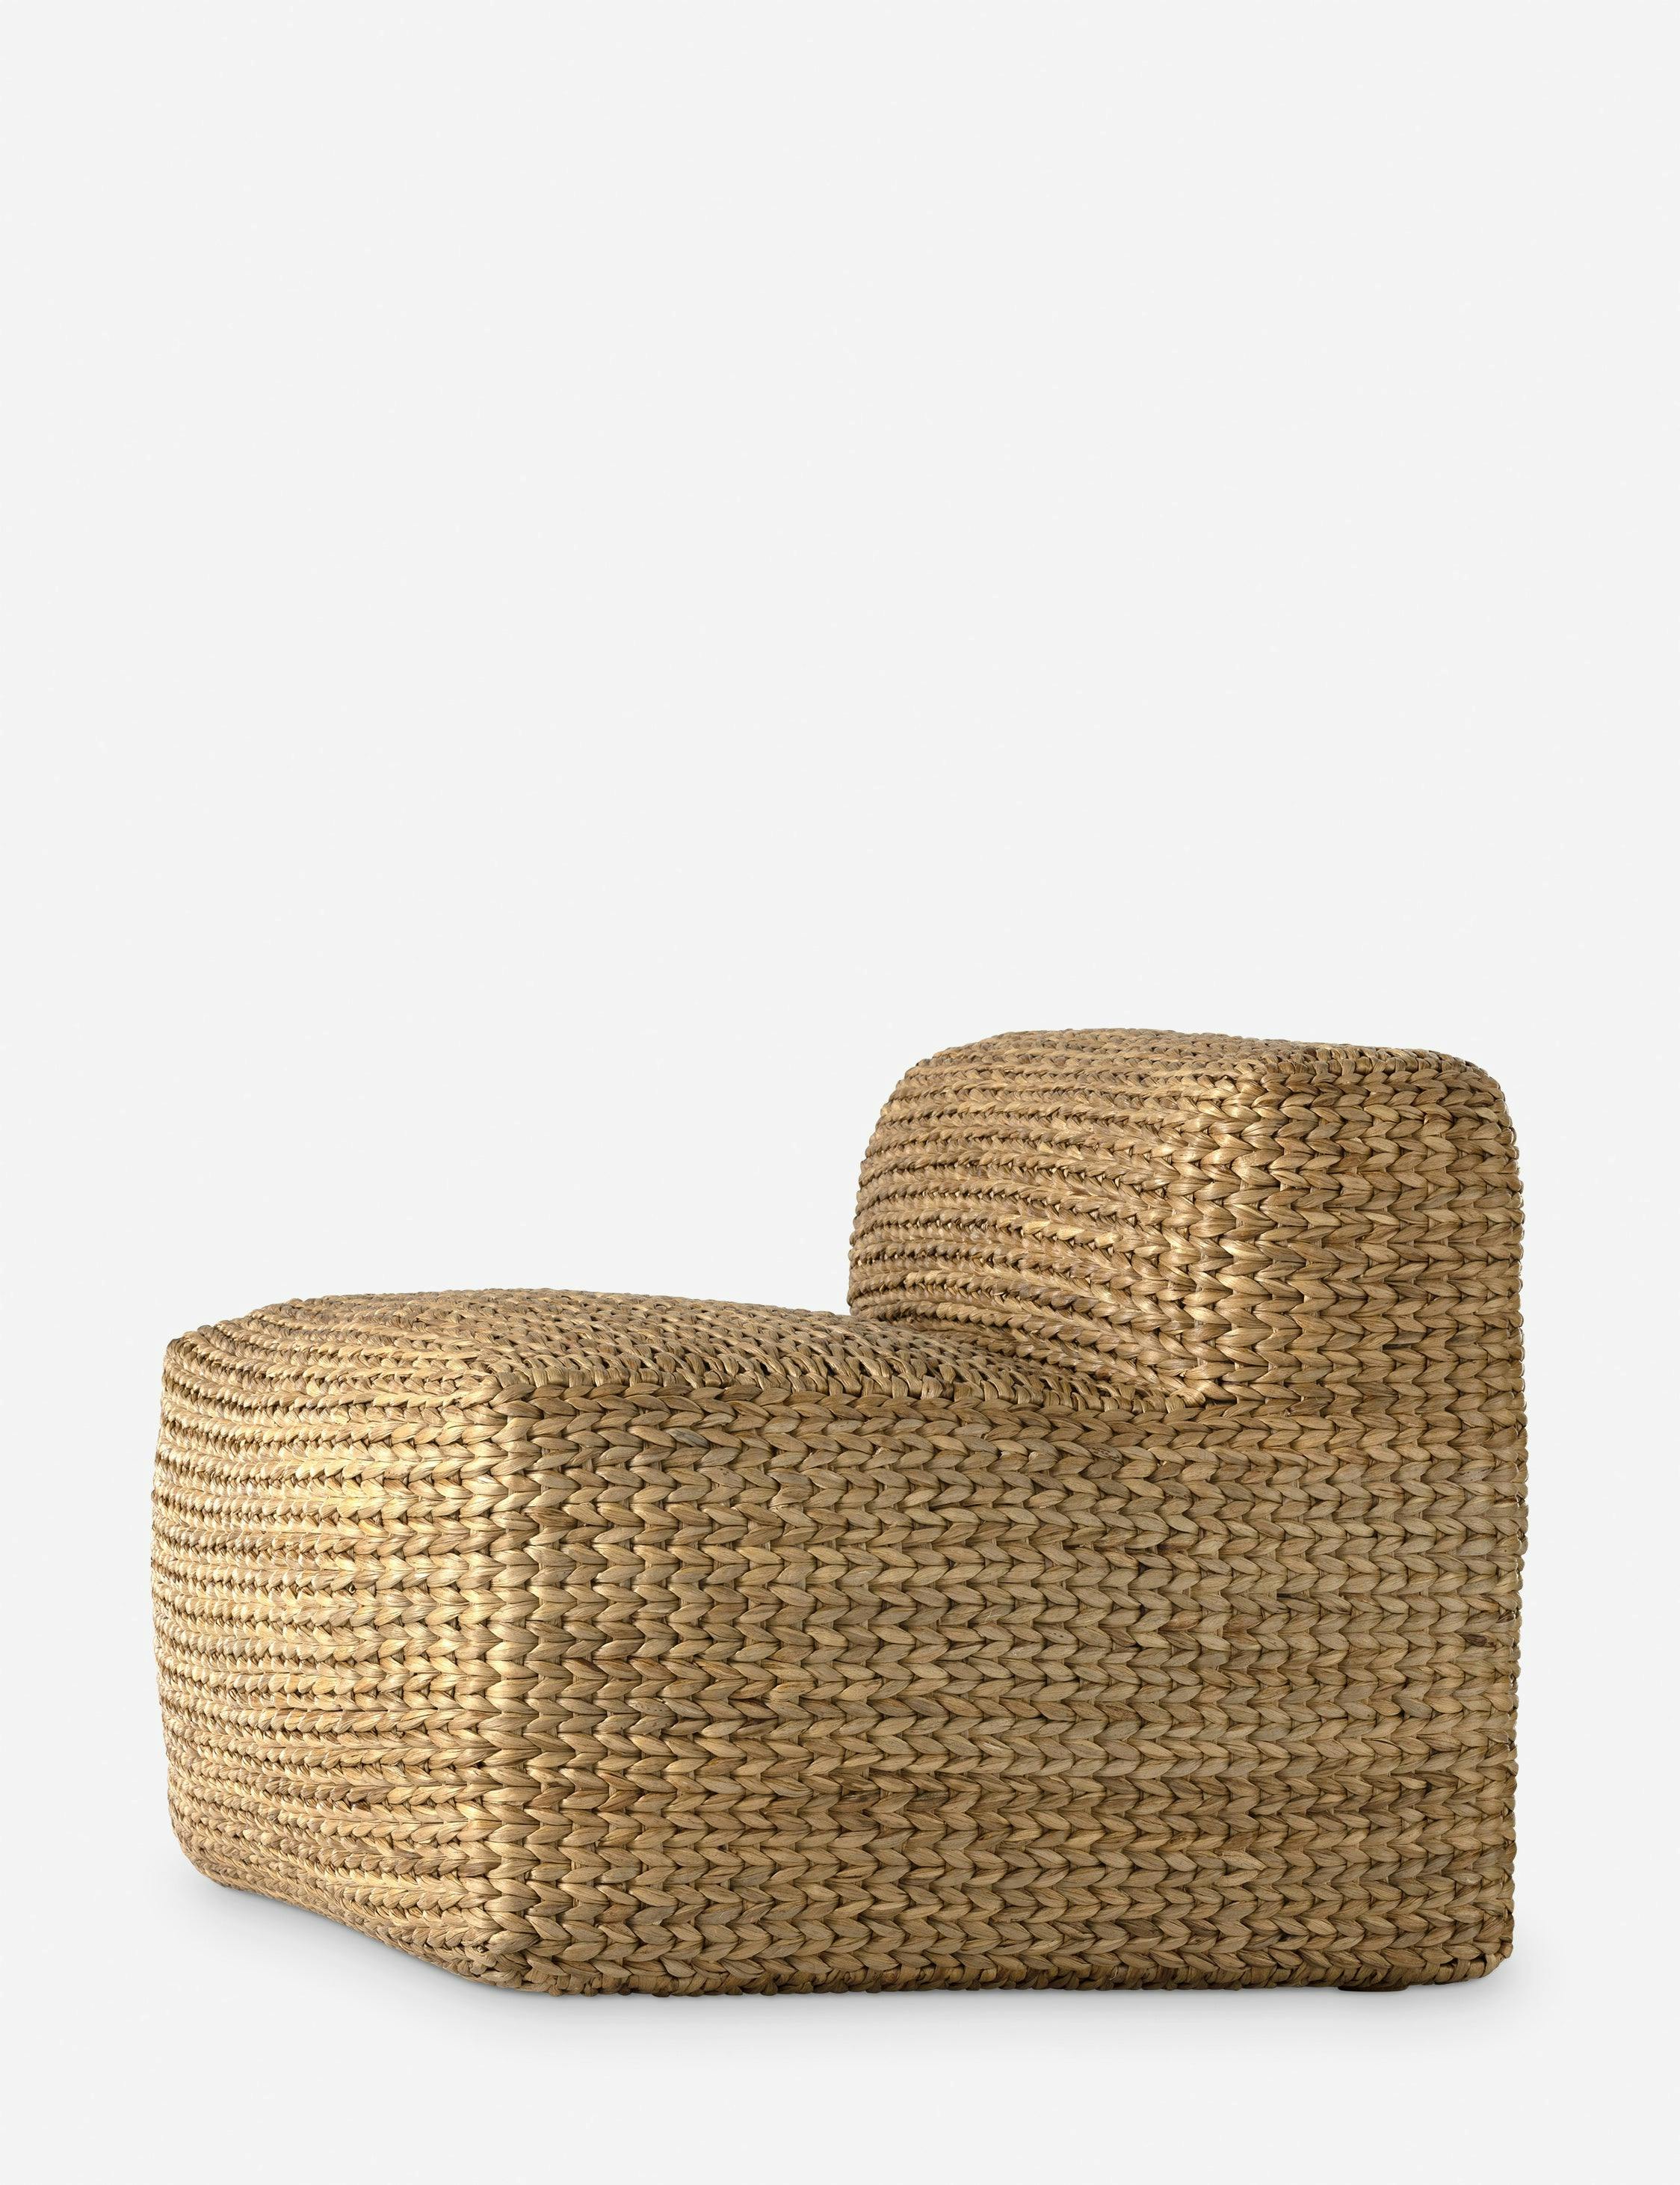 Masuma White Natural Weave Plush Accent Chair 31.5"